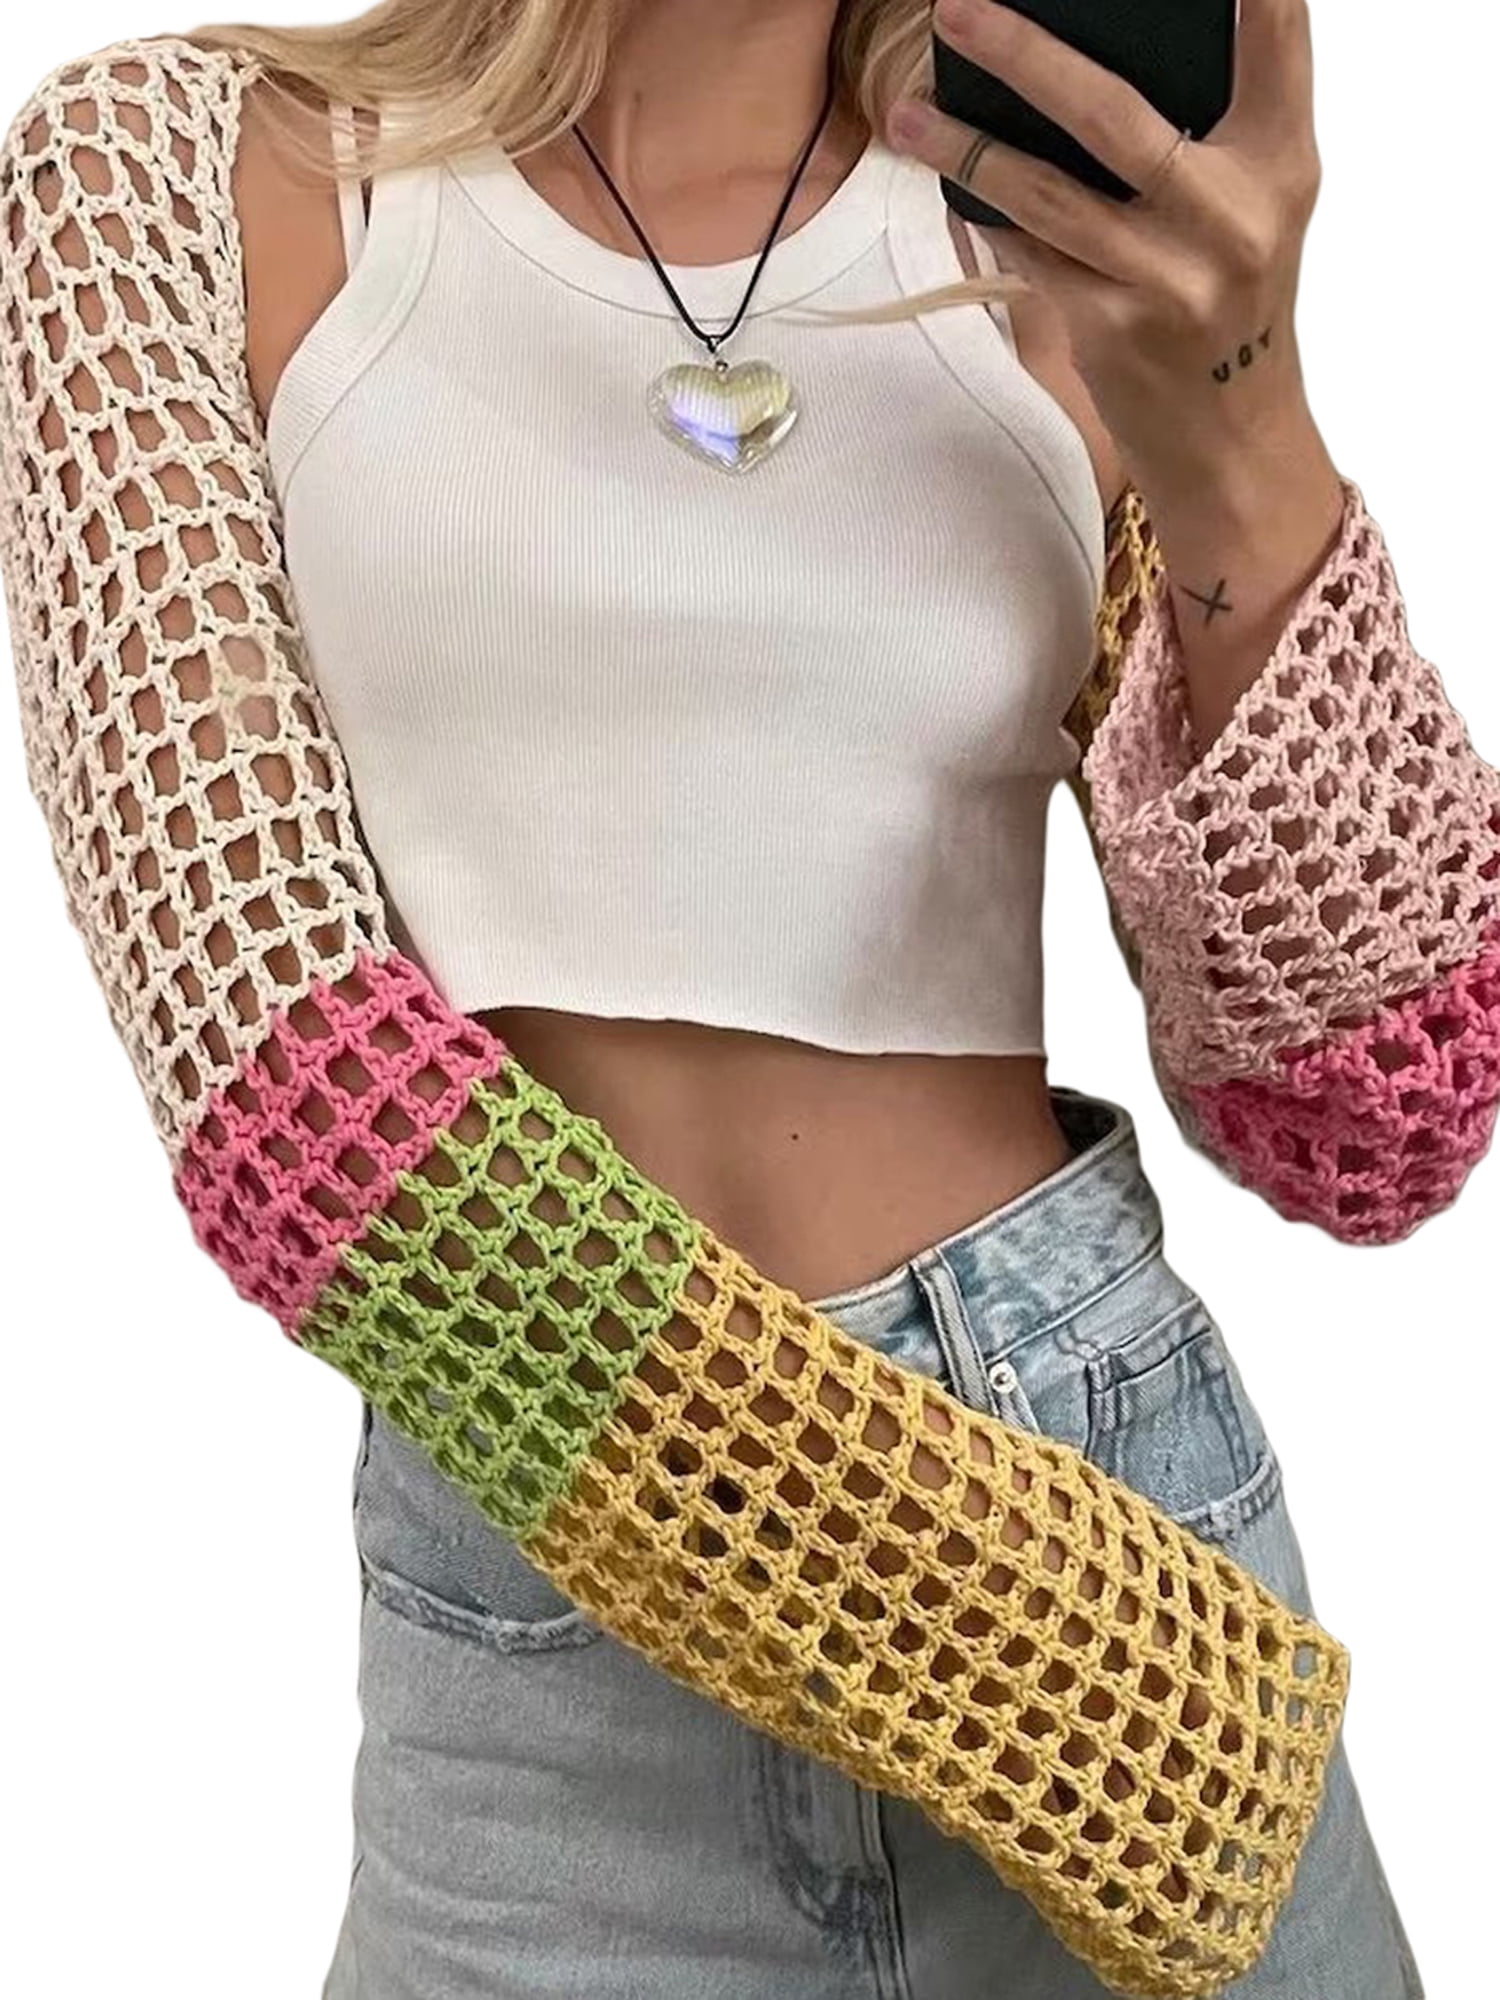 Tsseiatte Women Mesh Shrug, Long Sleeve Crochet Contrast Color Ladies  Summer Daily Party Crop Top 